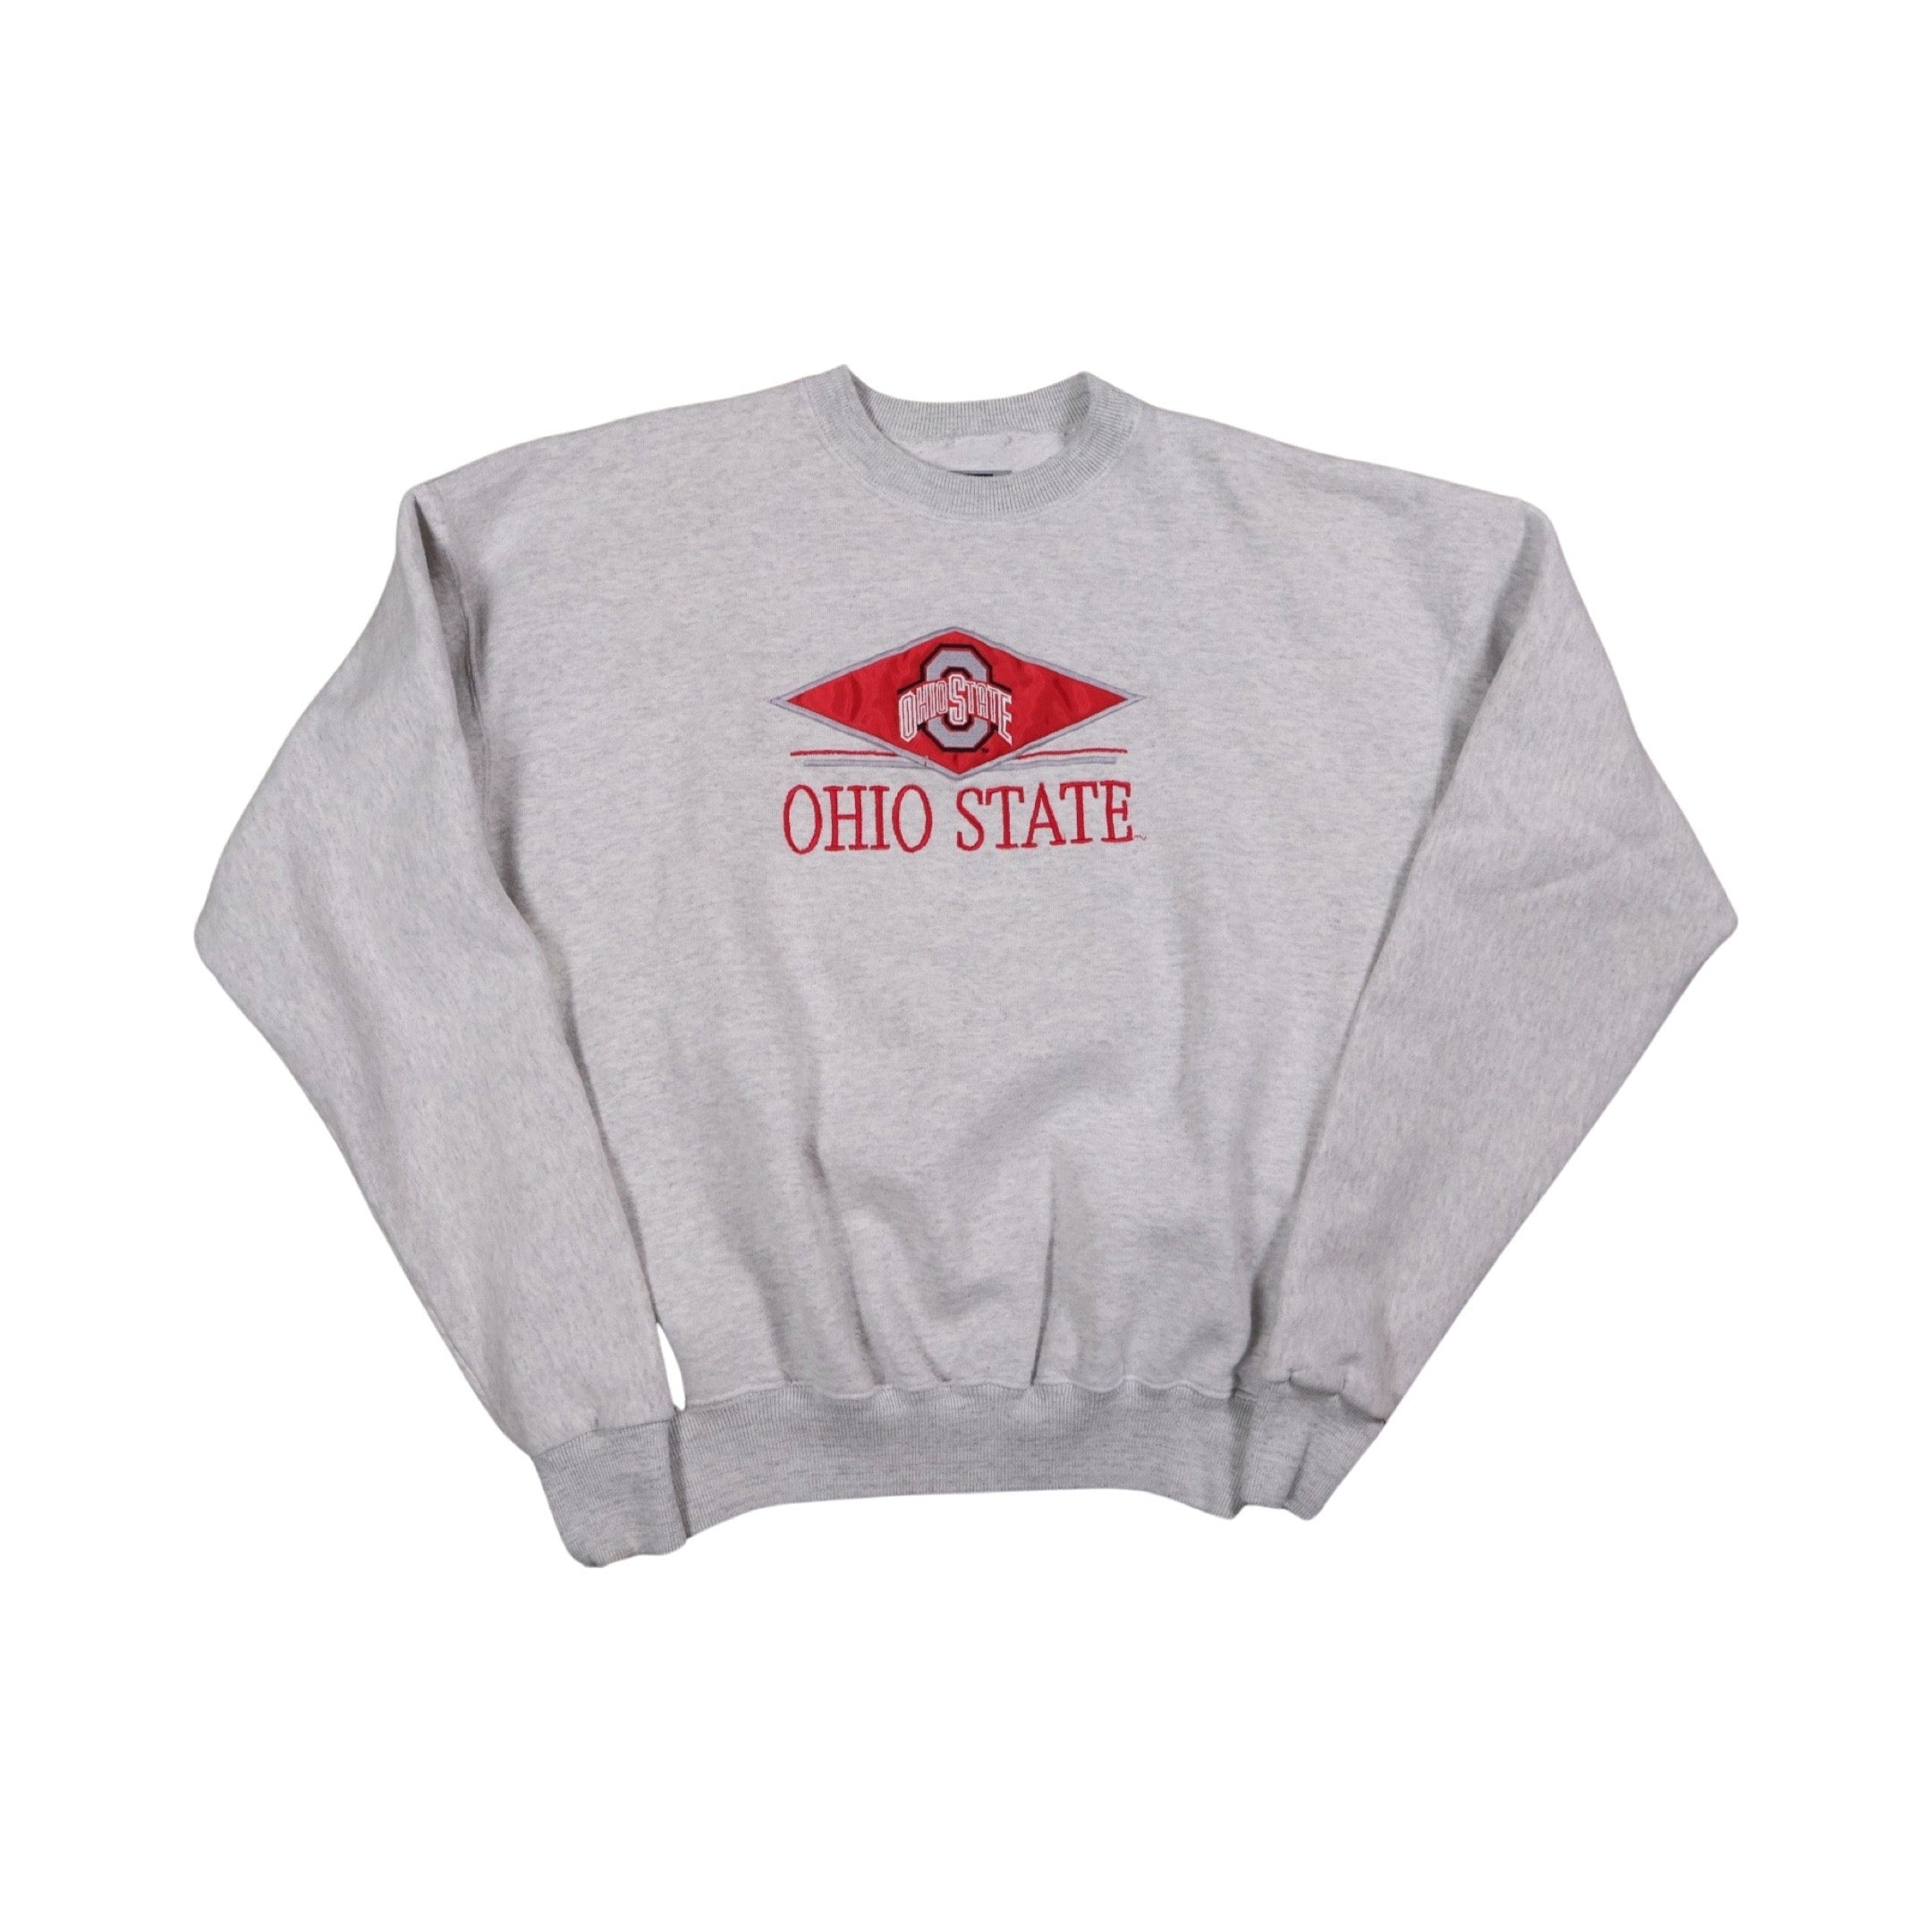 Ohio State 90s Sweater (XL)